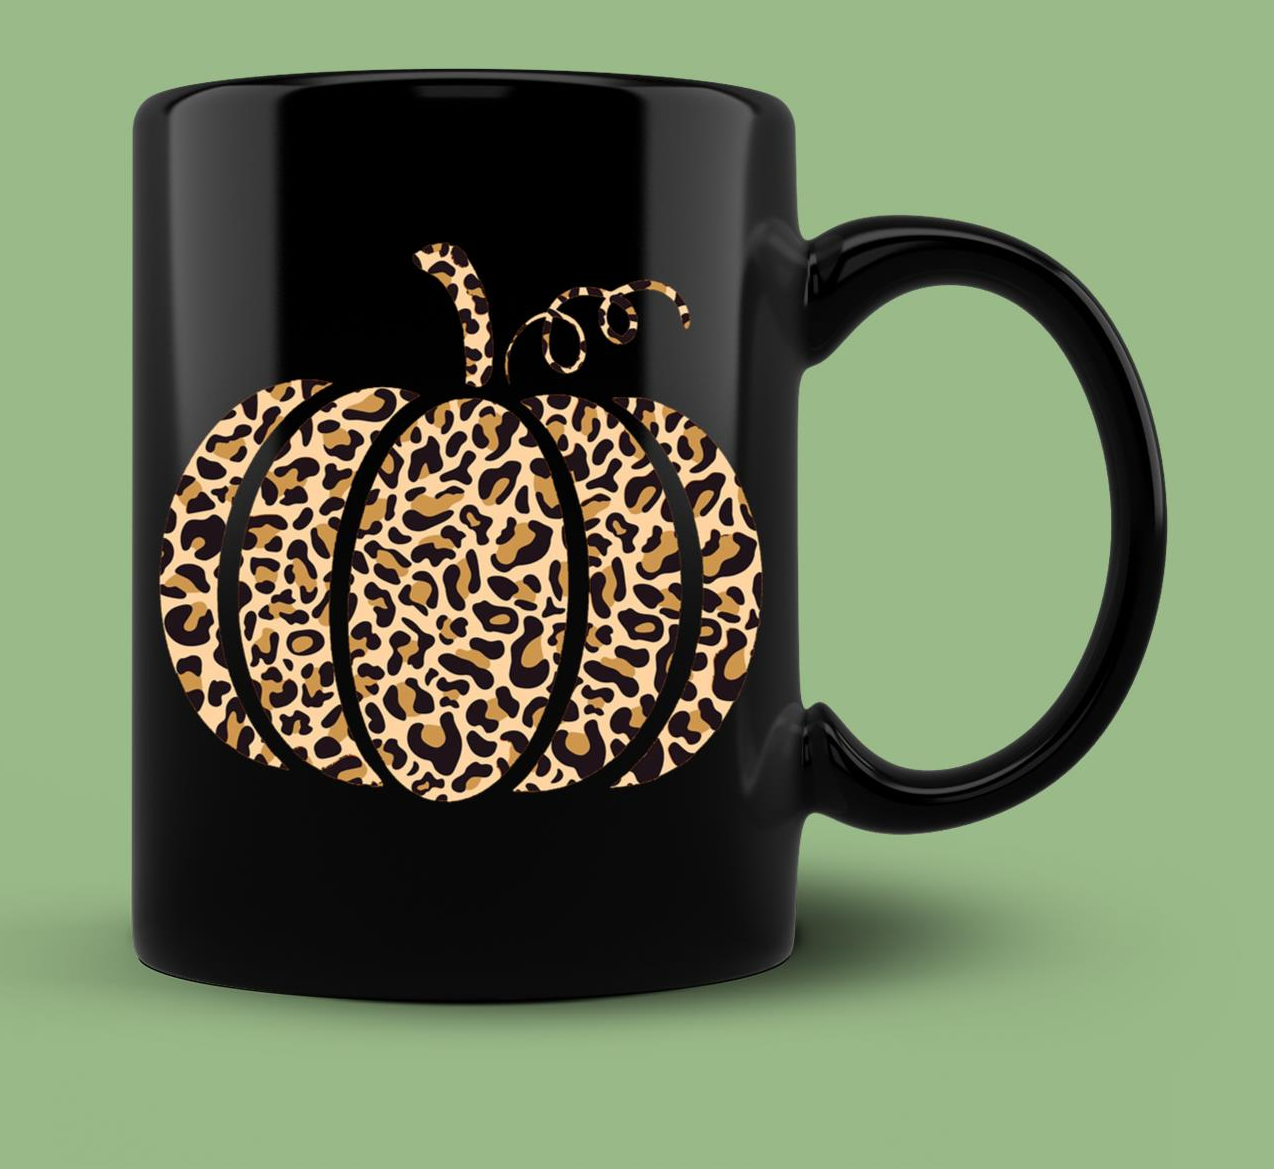 Skitongift Ceramic Novelty Coffee Mug Funny Thanksgiving Mug The Pumpkin